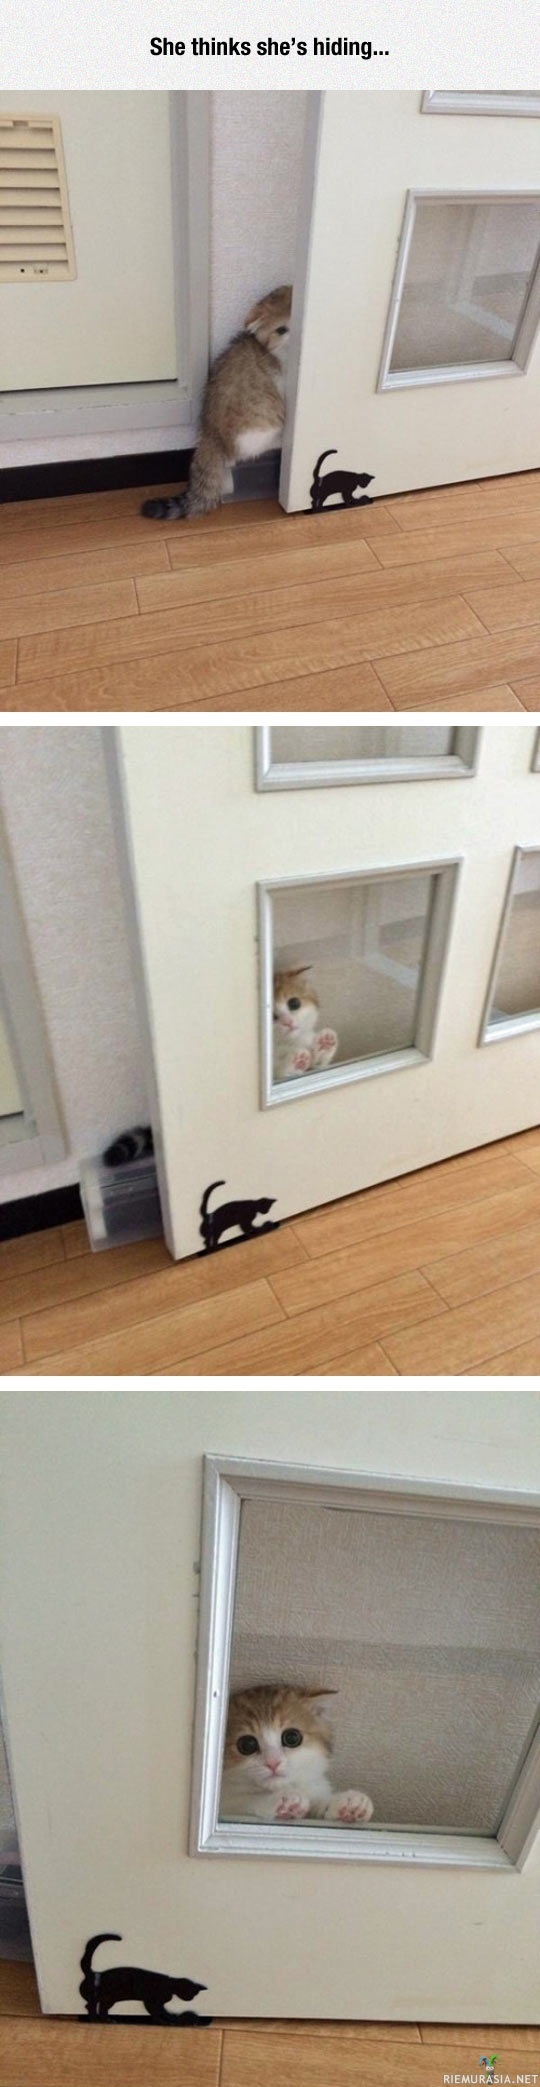 Piileskelevä kissa